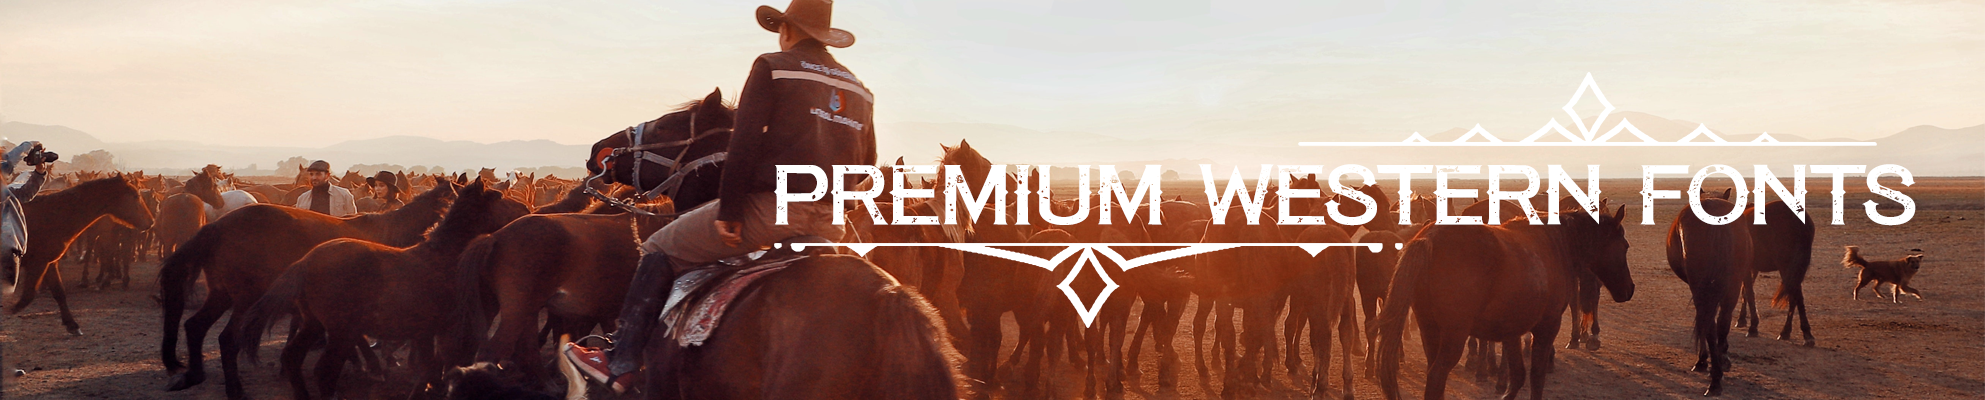 Premium Western Fonts